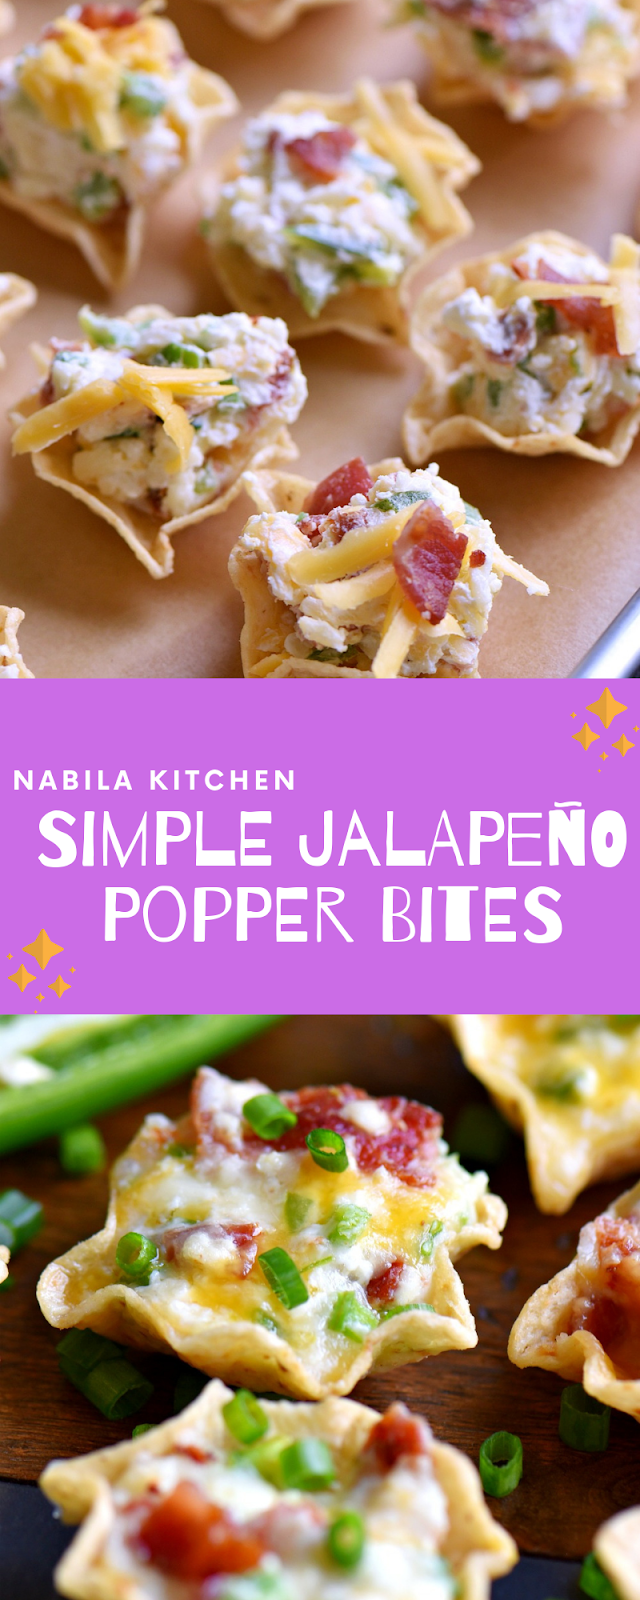 Simple Jalapeño Popper Bites - Nabila Kitchen